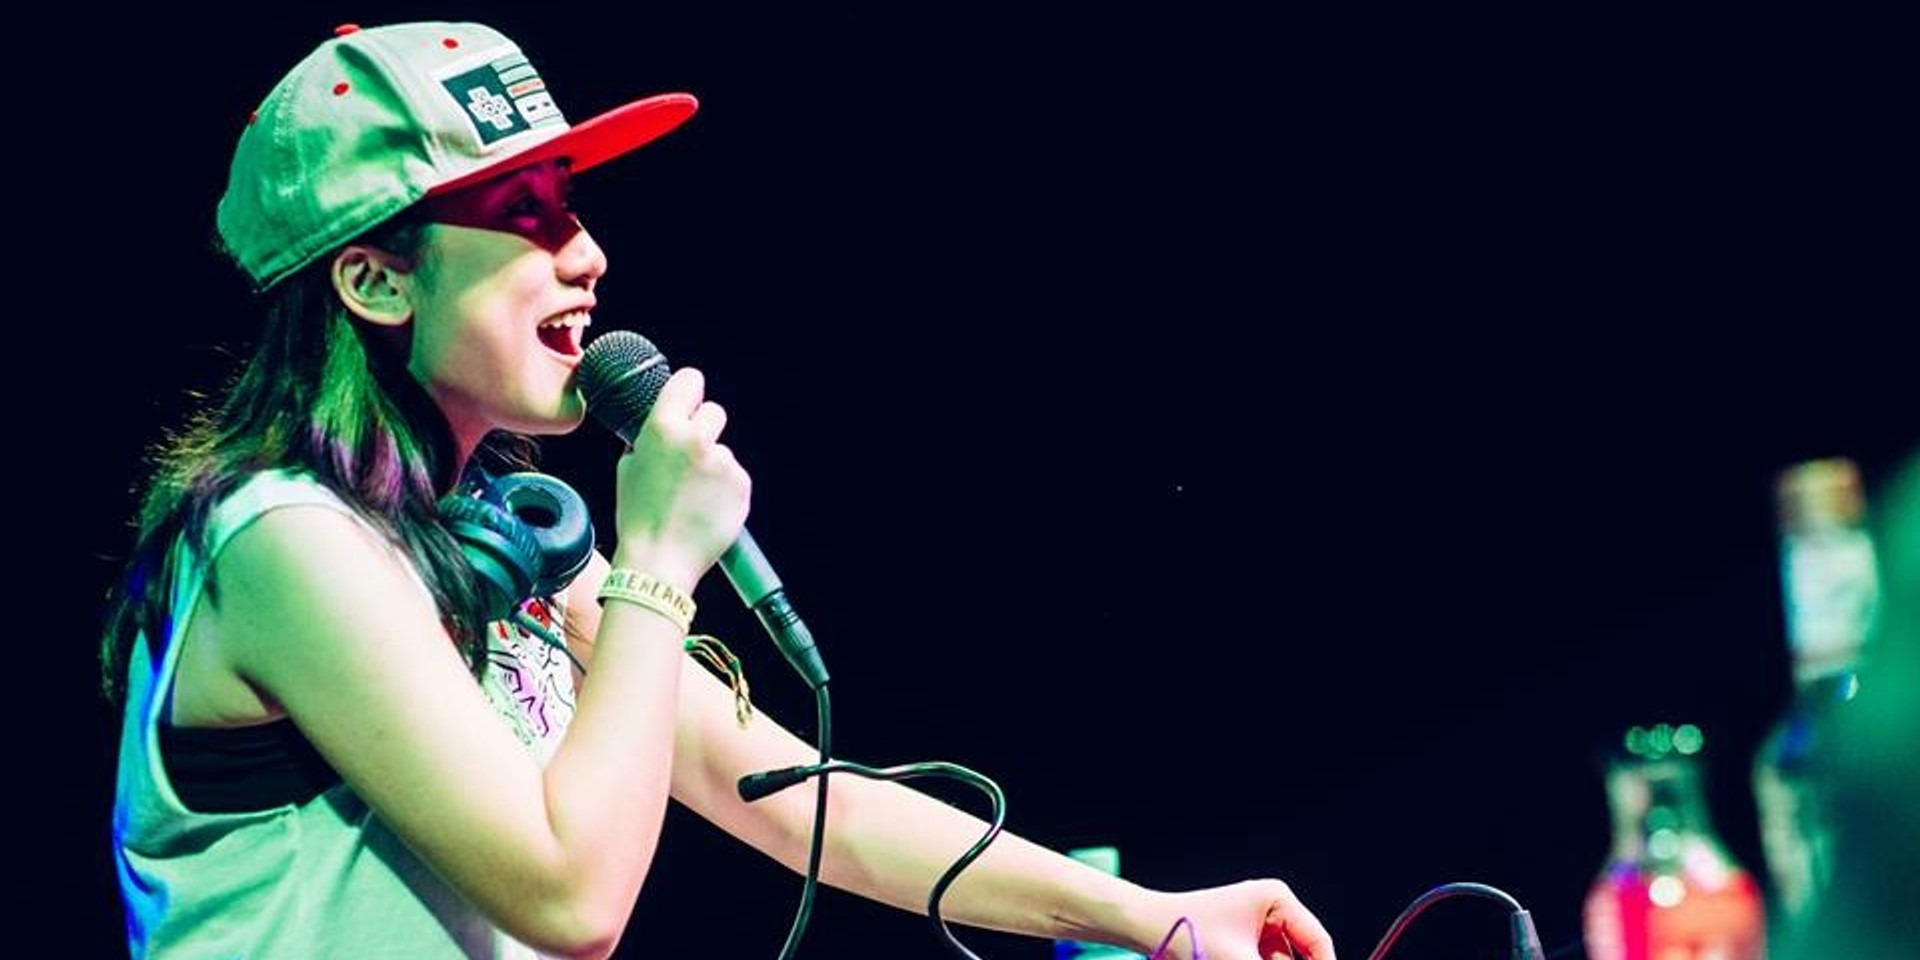 BP Valenzuela posts open call for MCs for her next album 